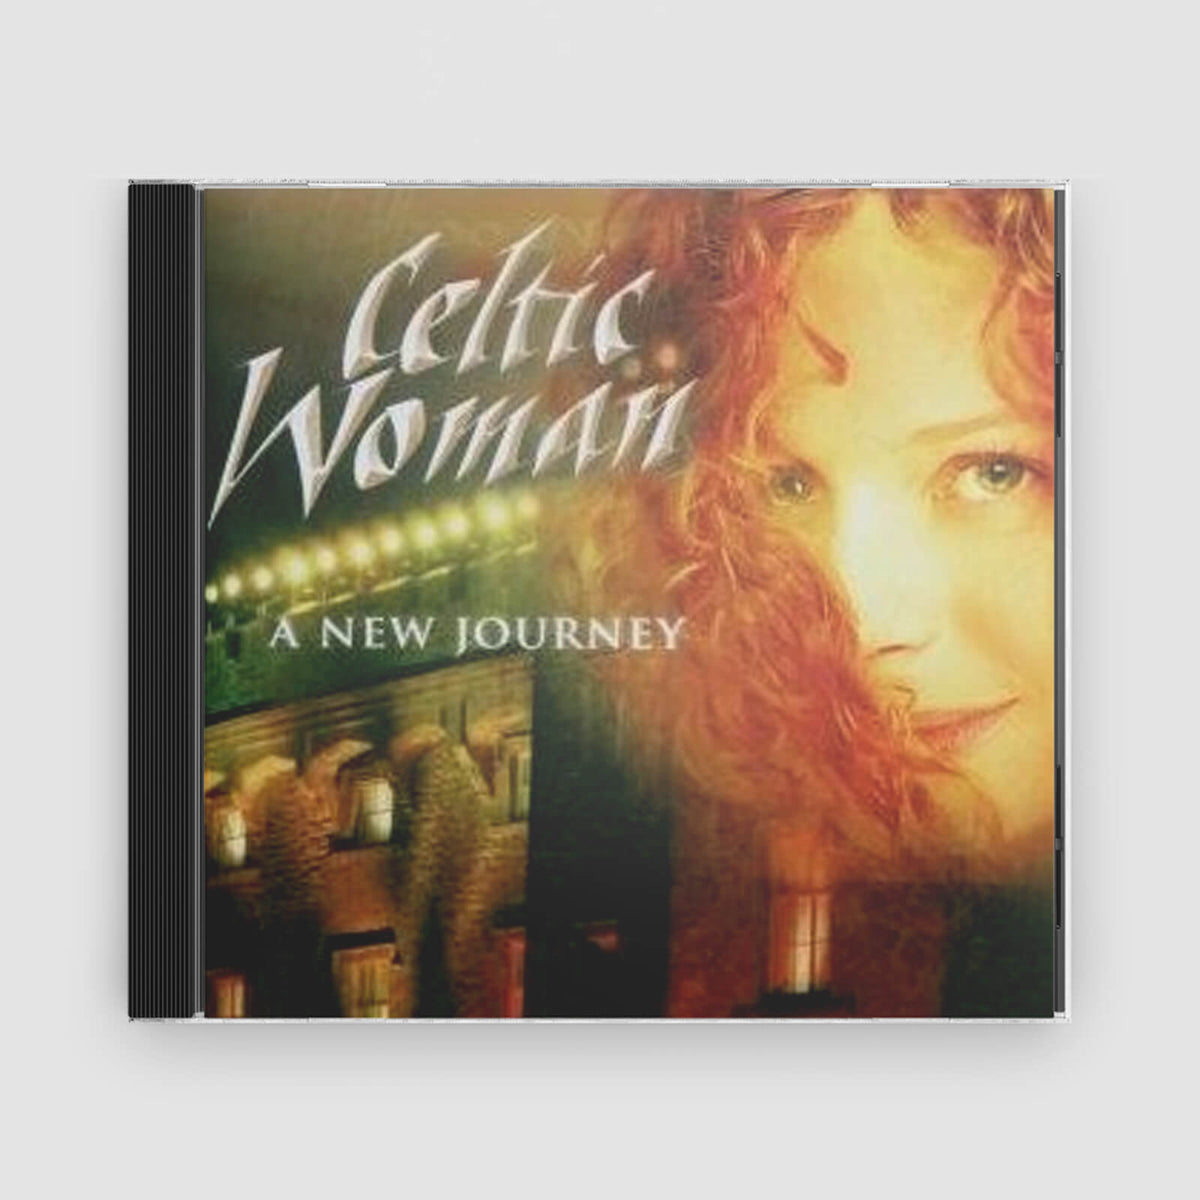 Celtic Woman : A New Journey